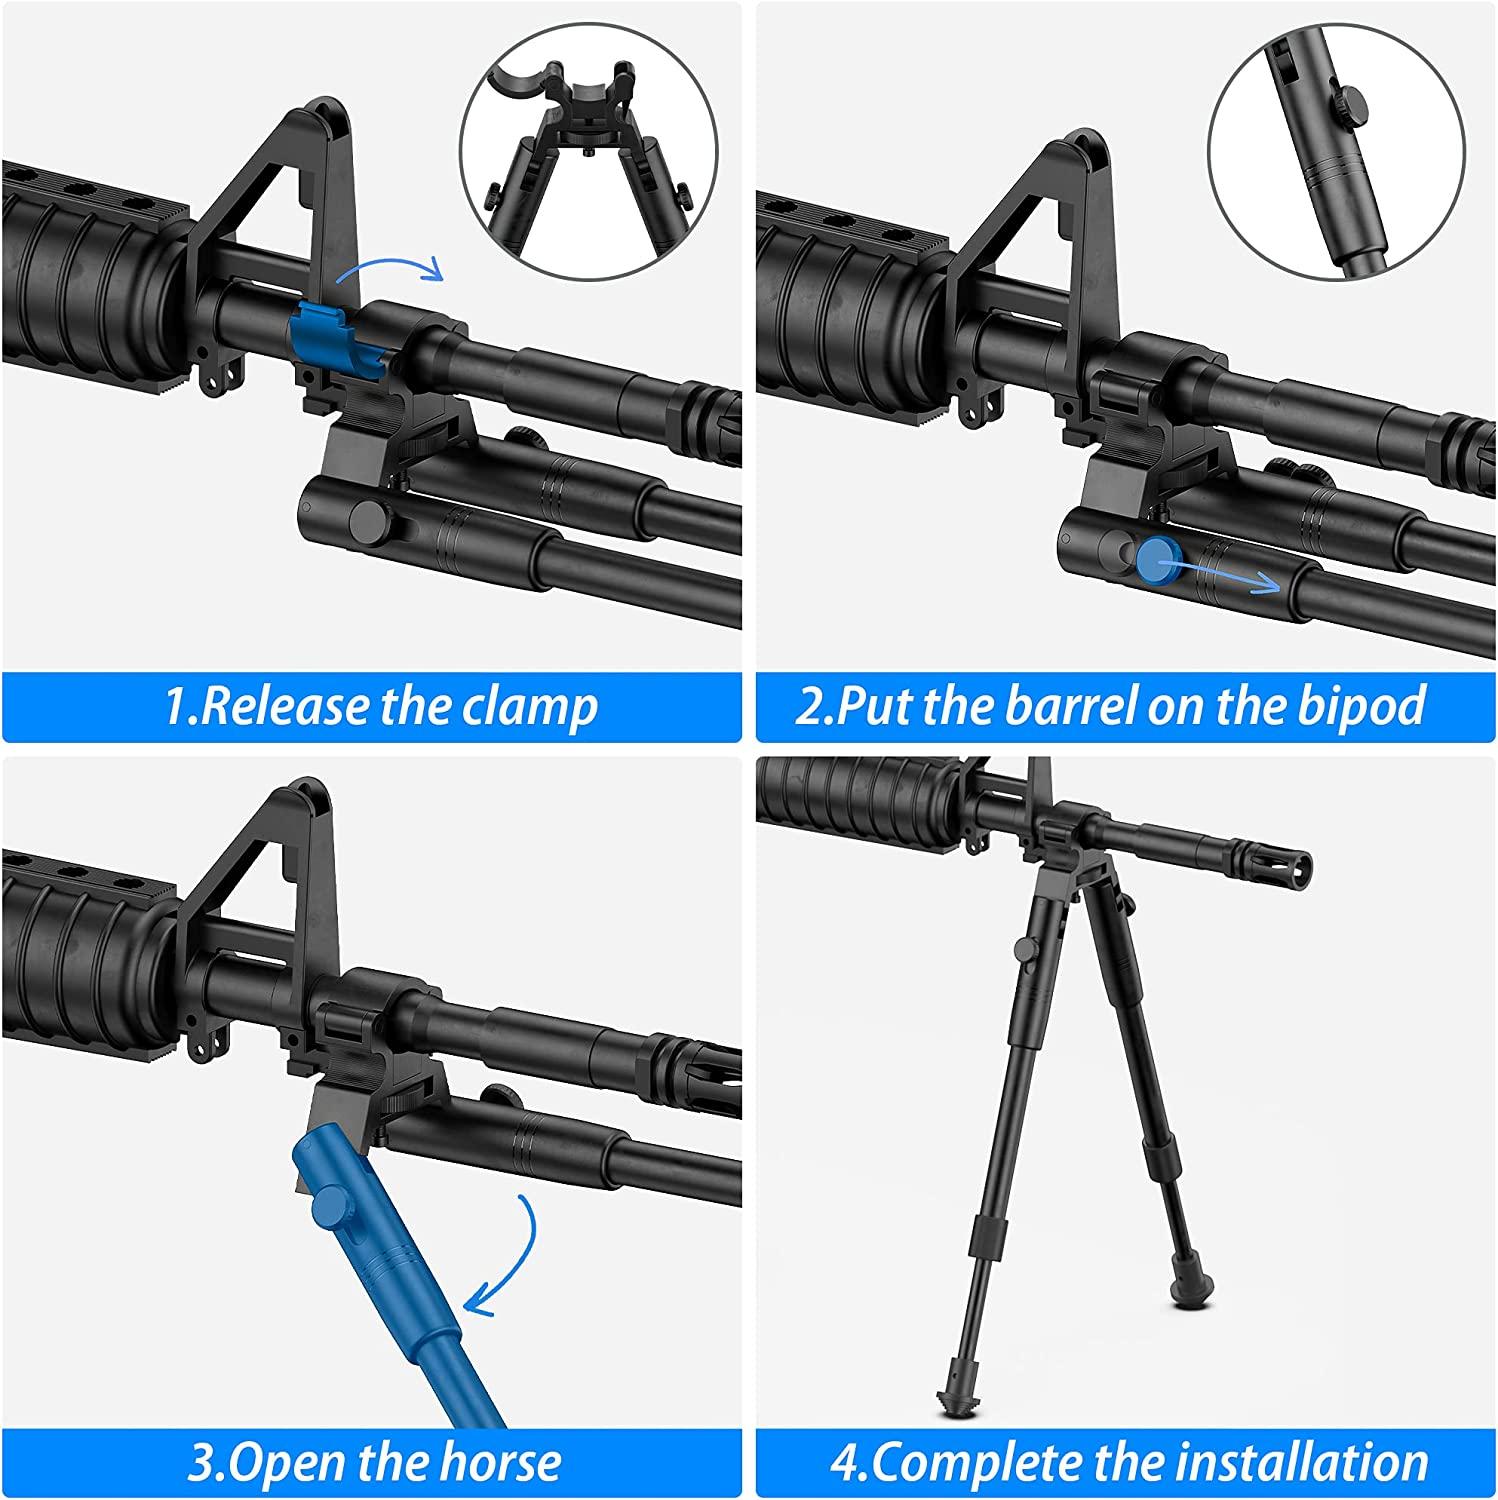 BESTSIGHT Clamp on Bipod for Rifles 6-9 inch Tactics Barrel Bipod  Adjustable Height(Barrel bipod Diameter 11-19mm)